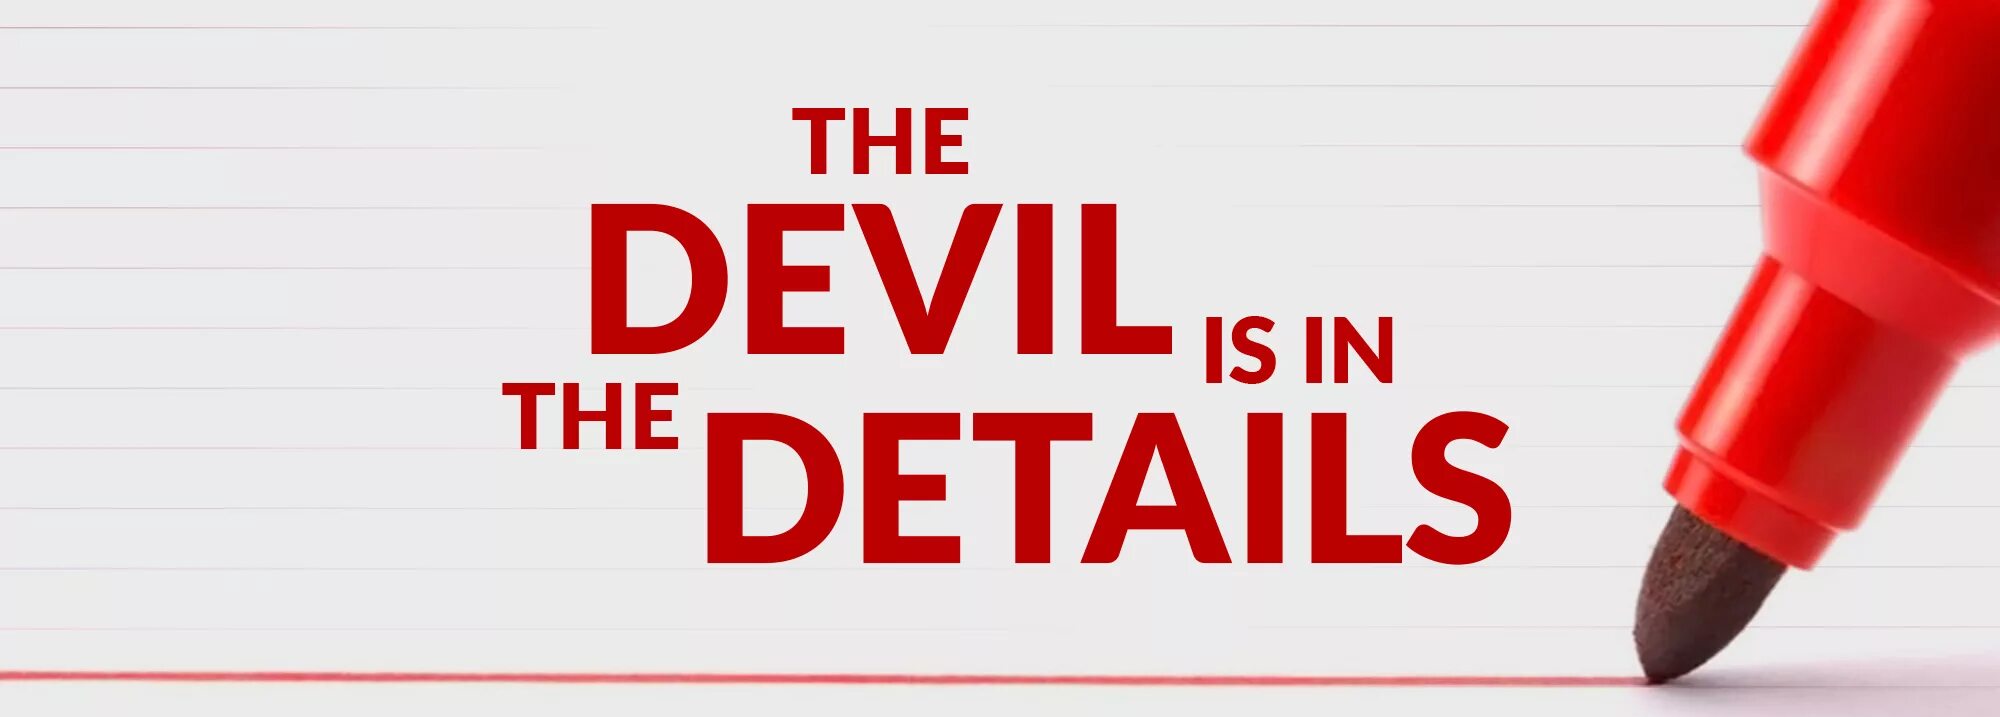 Devil in the details. Devil is in the details. Devil's details. Detail надпись. Due diligence логотип.